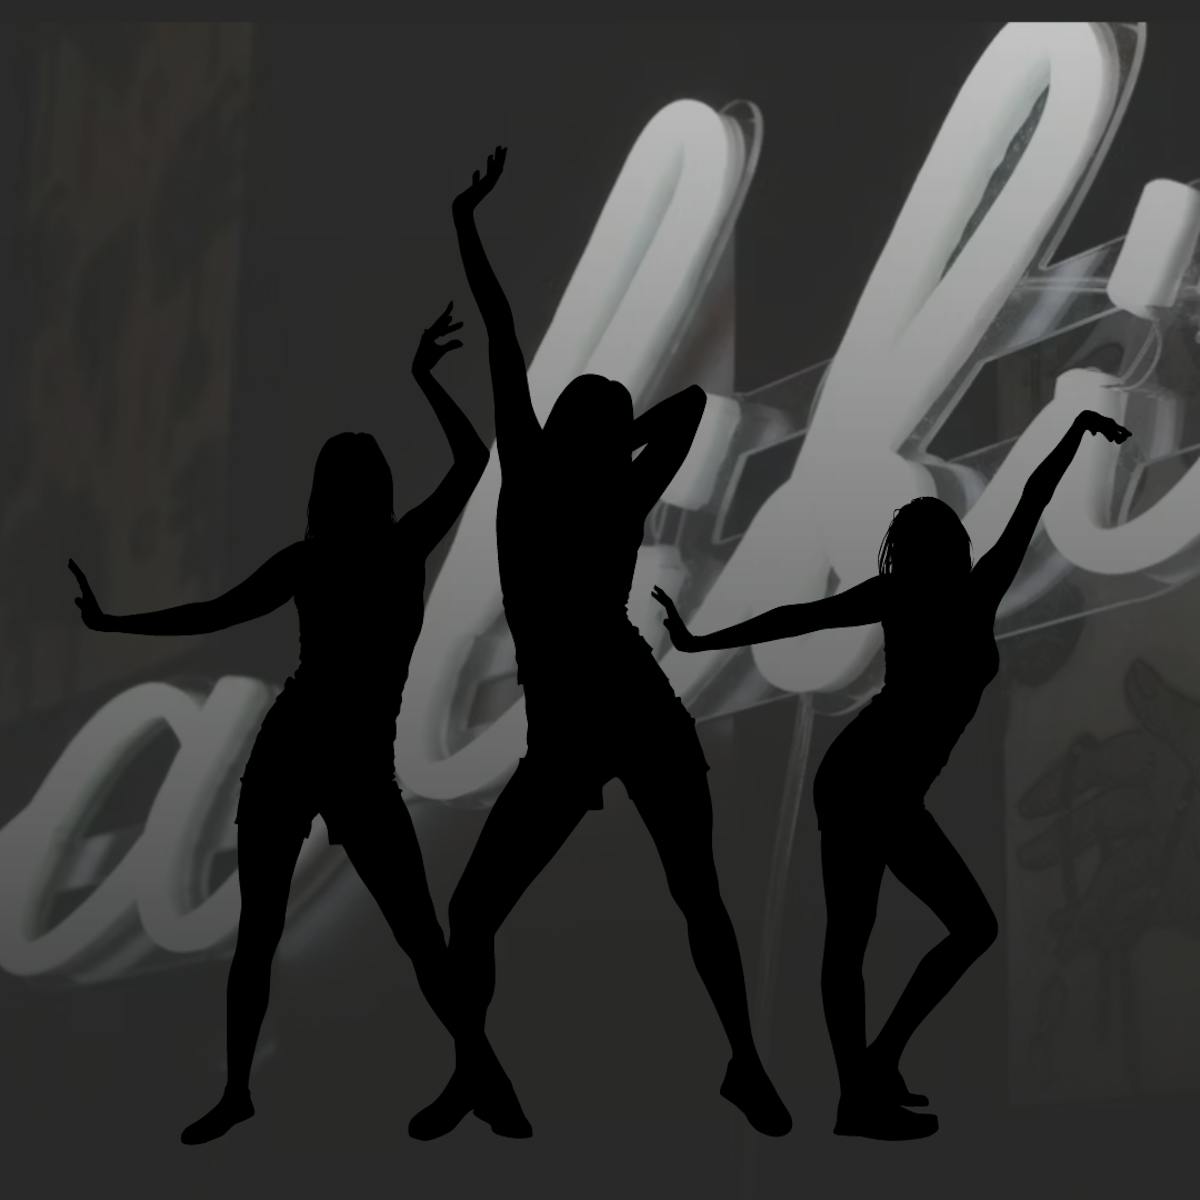 alibi cellblock dance party march 8